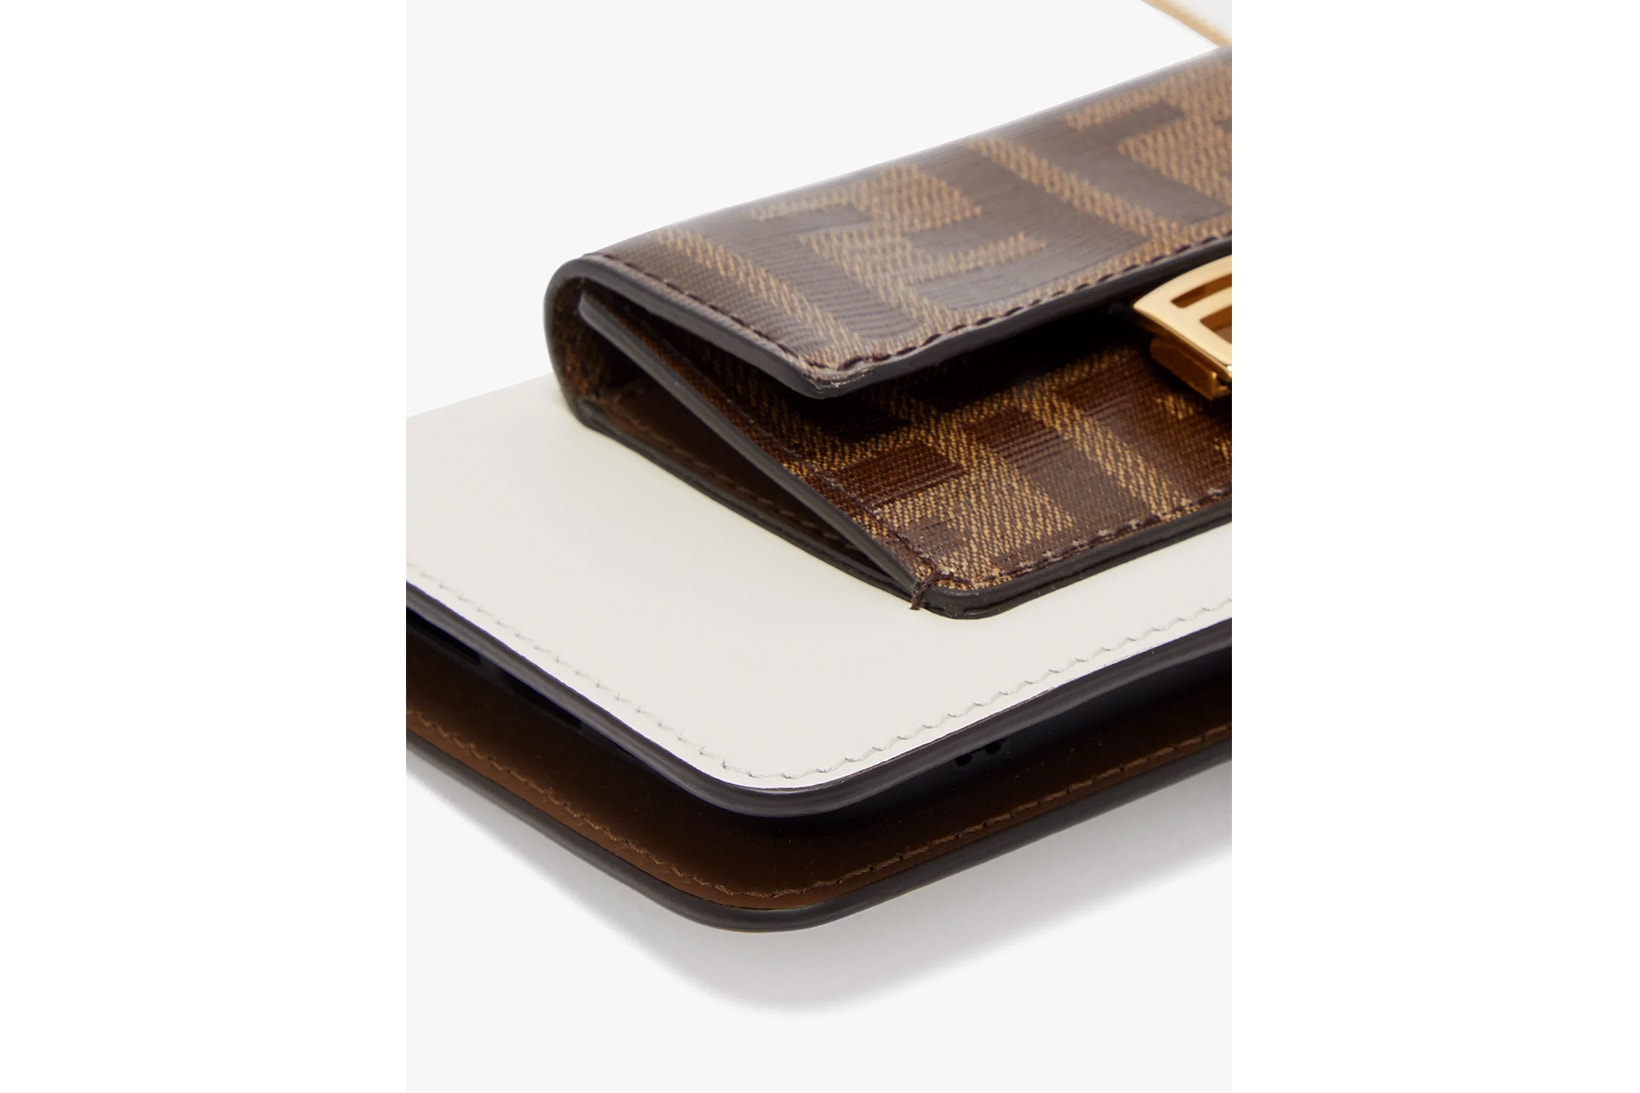 fendi iphone x phone case cross body bag wallet designer accessories leather white black